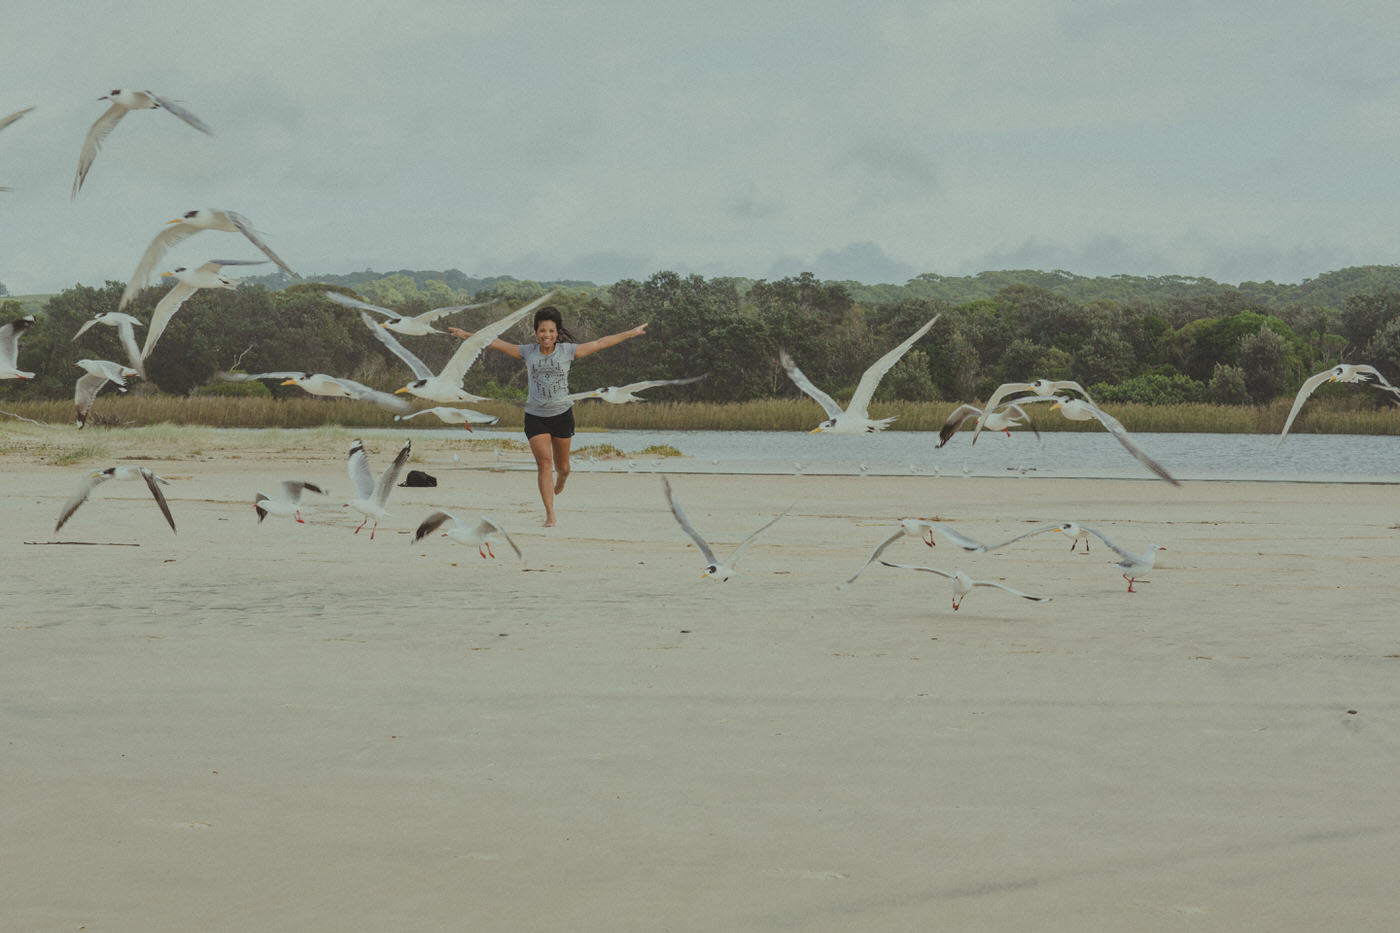 girl chasing seagulls - happy